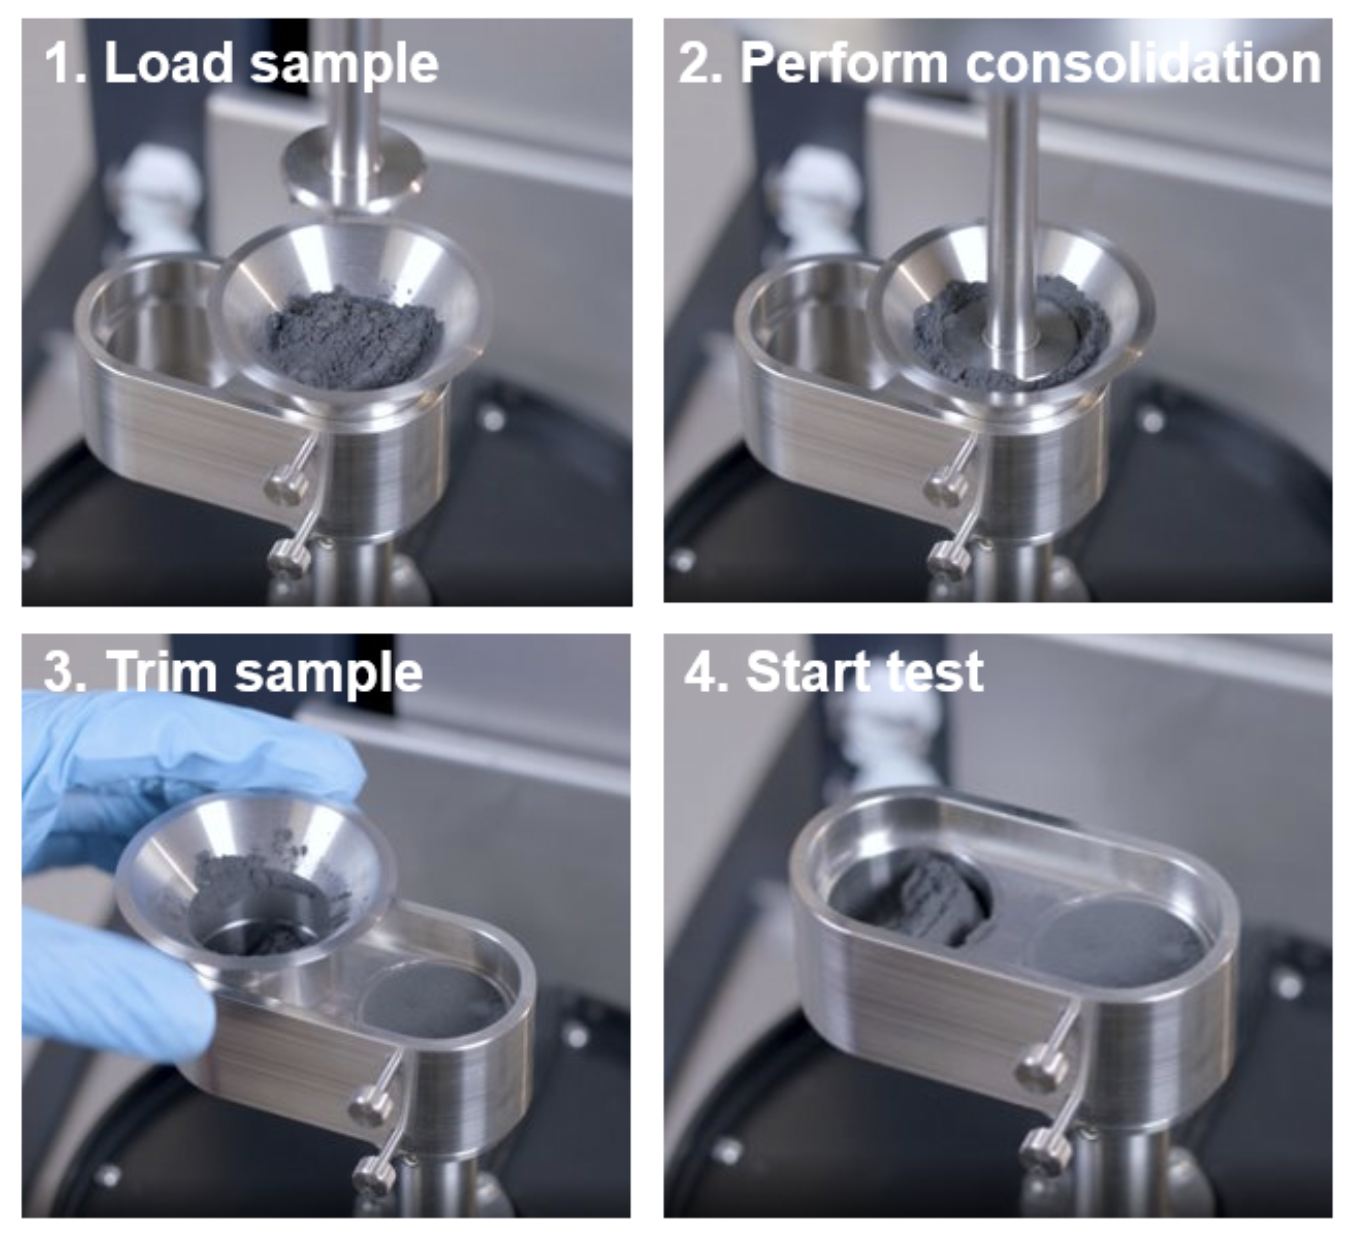 Figure 2. Procedure to prepare powder samples for shear testing [1]